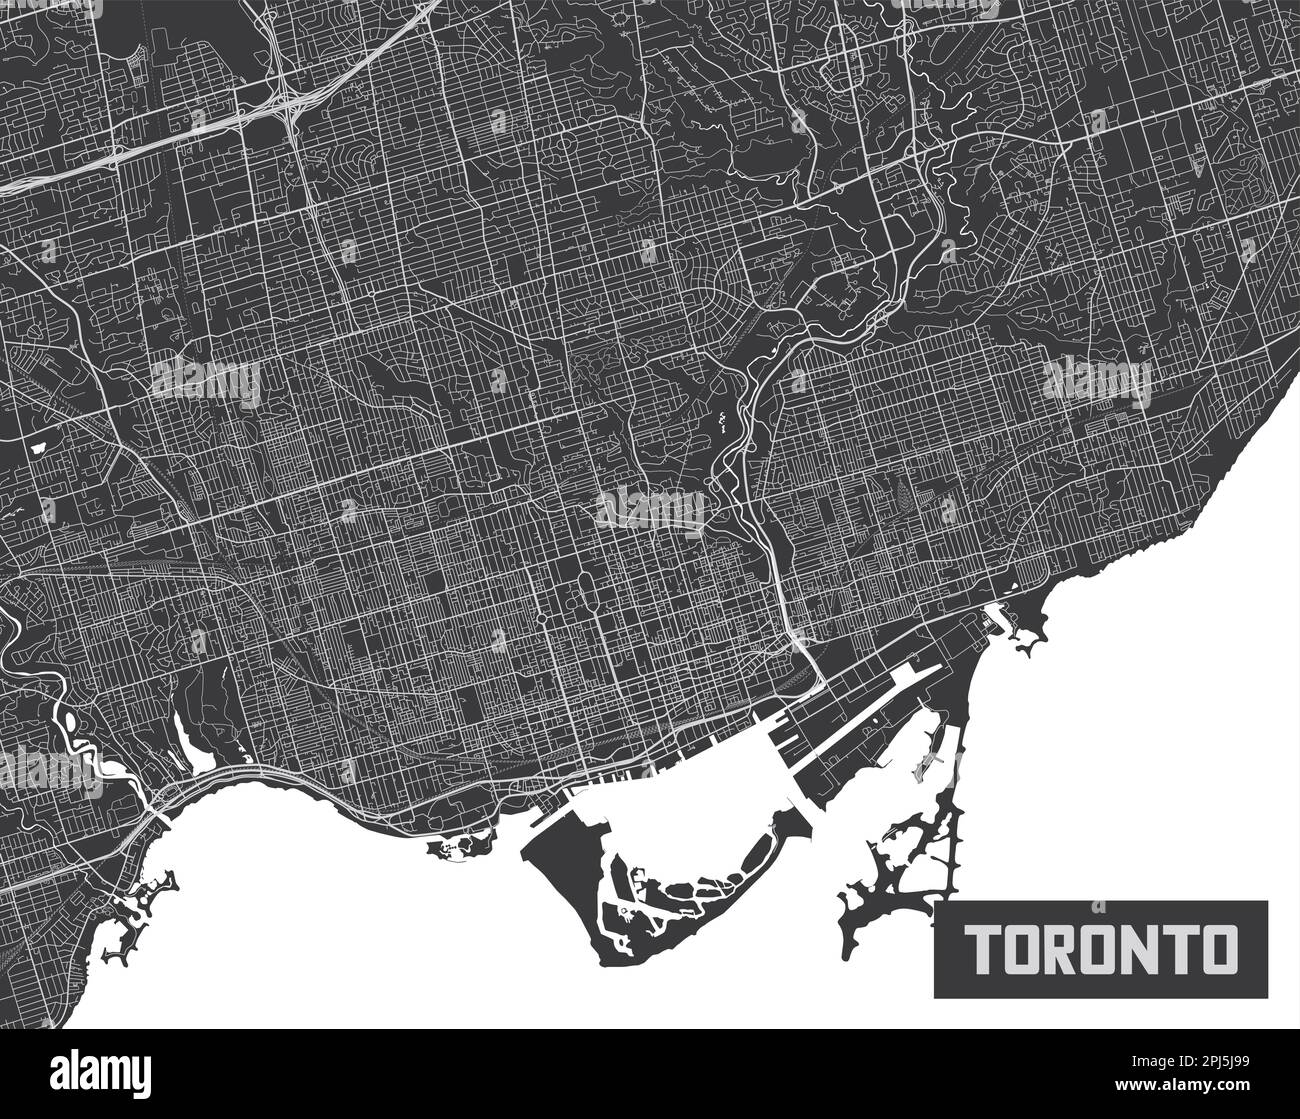 Minimalistic Toronto city map poster design. Stock Vector